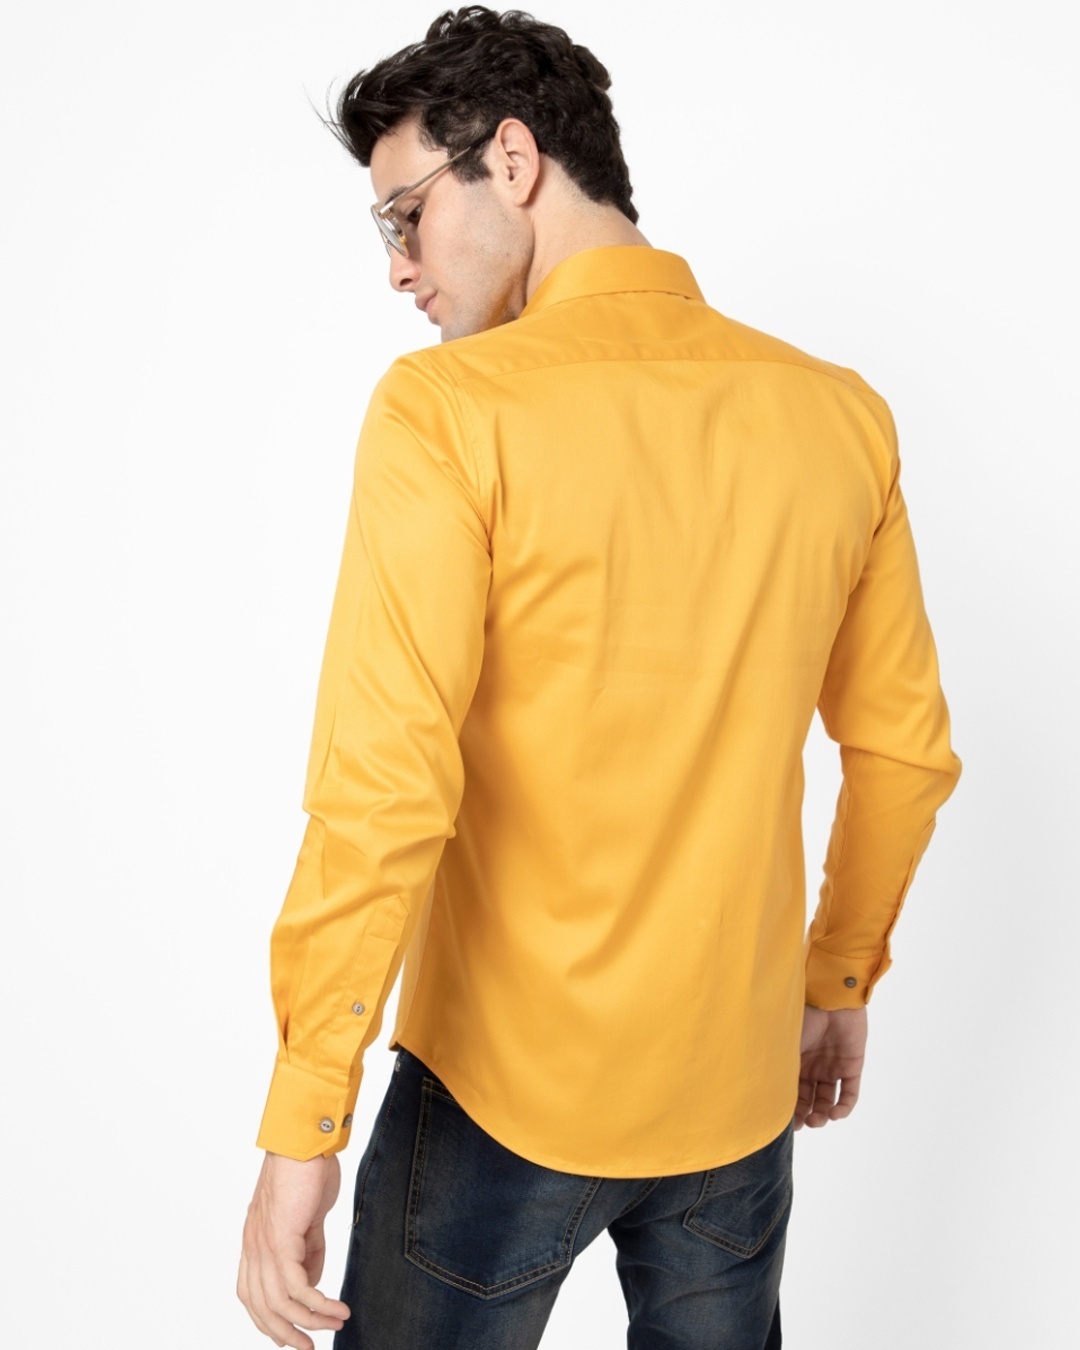 Shop Men's Yellow Shirt-Design